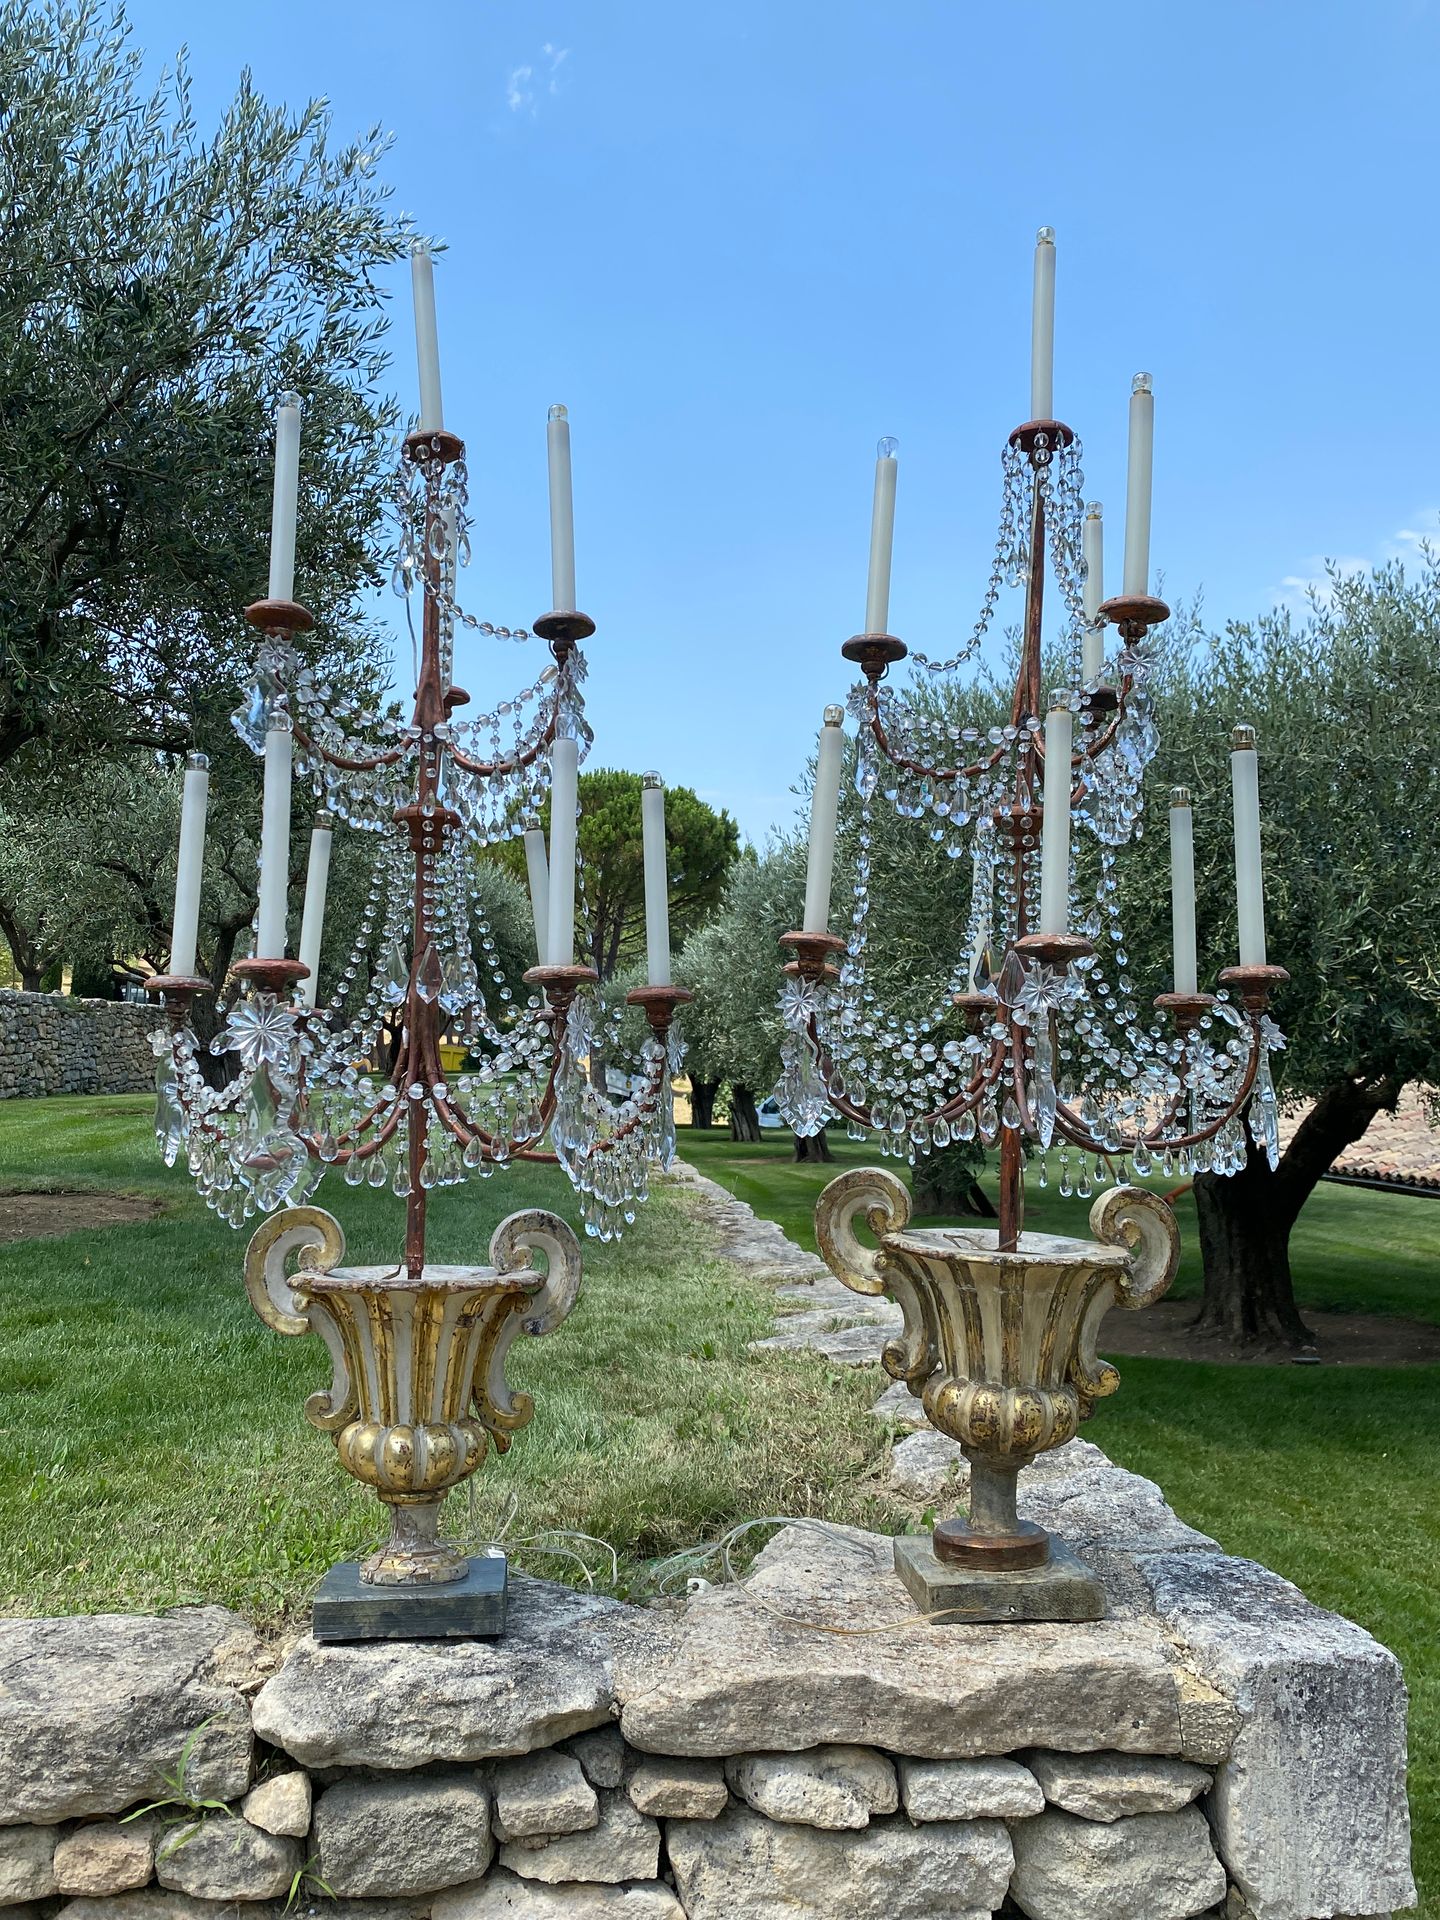 Null 一对重要的锻铁烛台，有六个灯臂和水晶吊坠。

底座由一个带两个手柄的花瓶组成，奶油色和金色的漆面雕刻木头，上面有锯齿状的图案。

H.160厘米